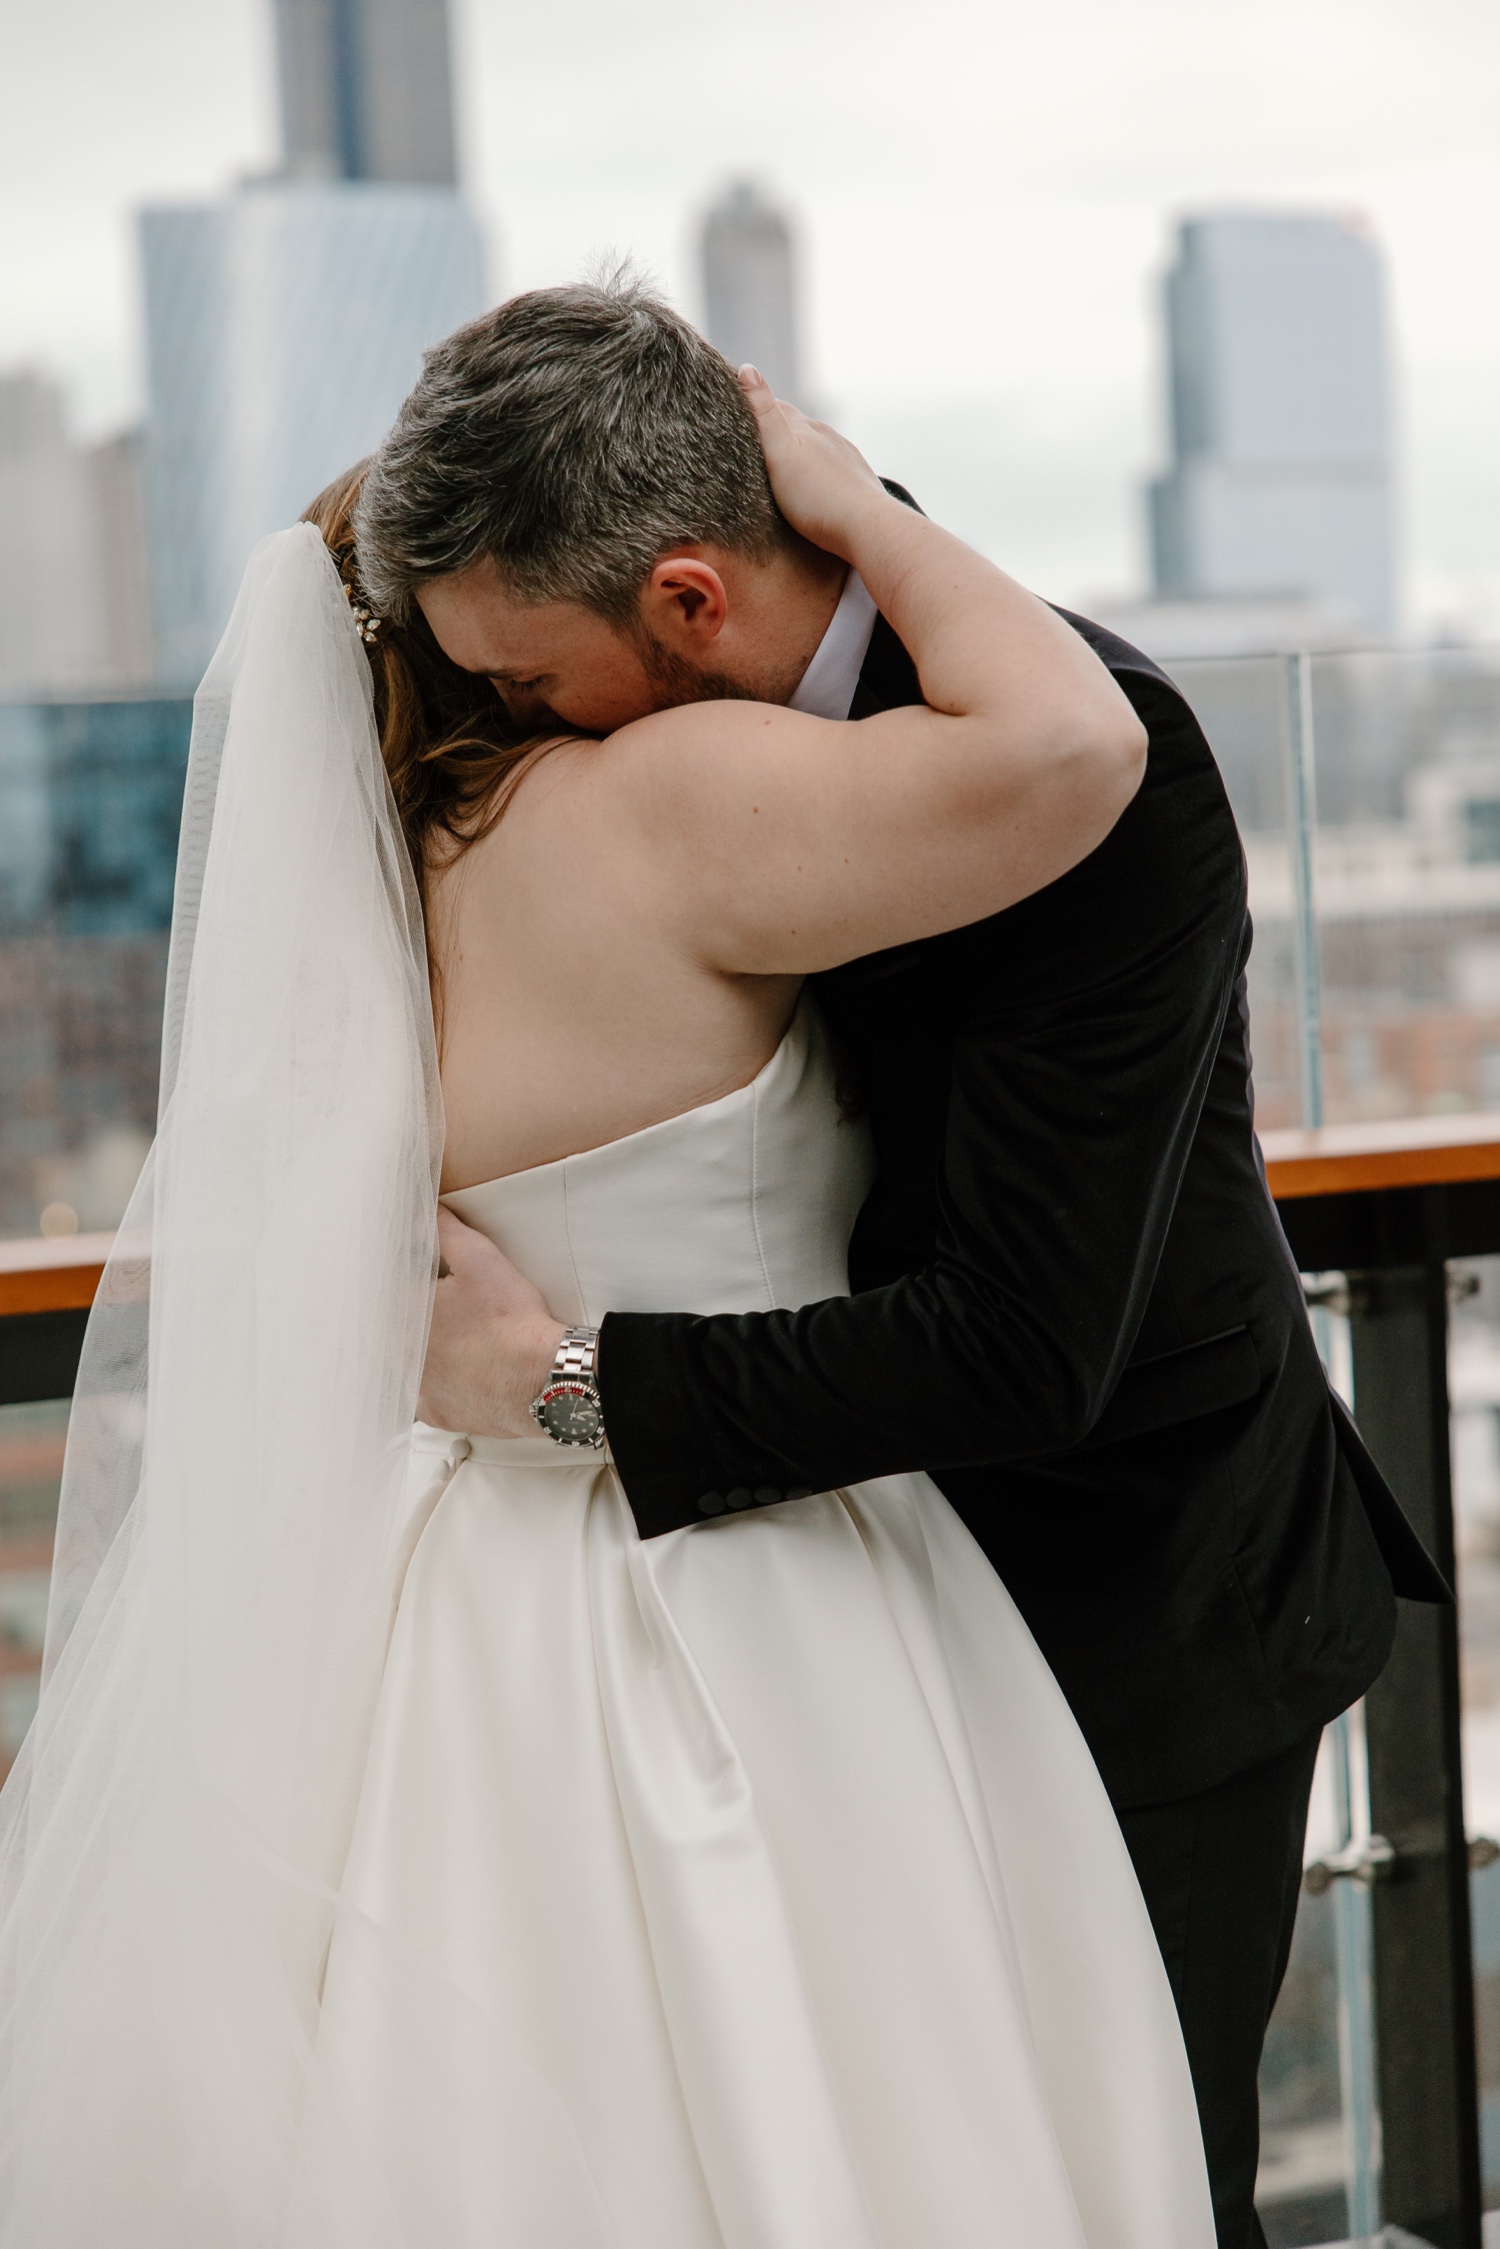 City View Loft Chicago Wedding | Chicago Wedding Photographer